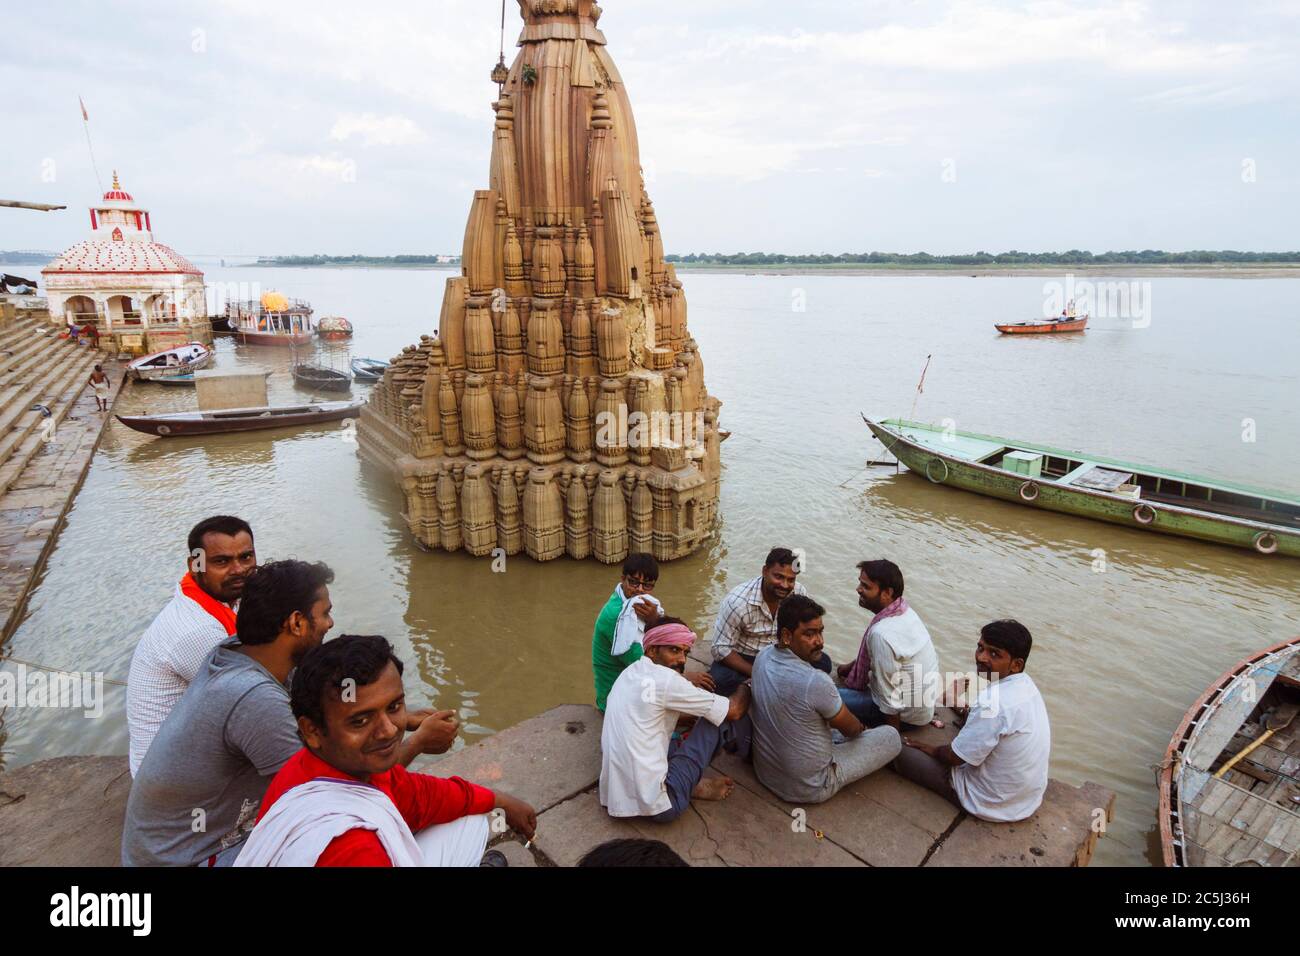 Varanasi, Uttar Pradesh, India : A group of men sit next to the partially sunken Ratneshwar Mahadev temple also known as the Leaning temple of Varanas Stock Photo